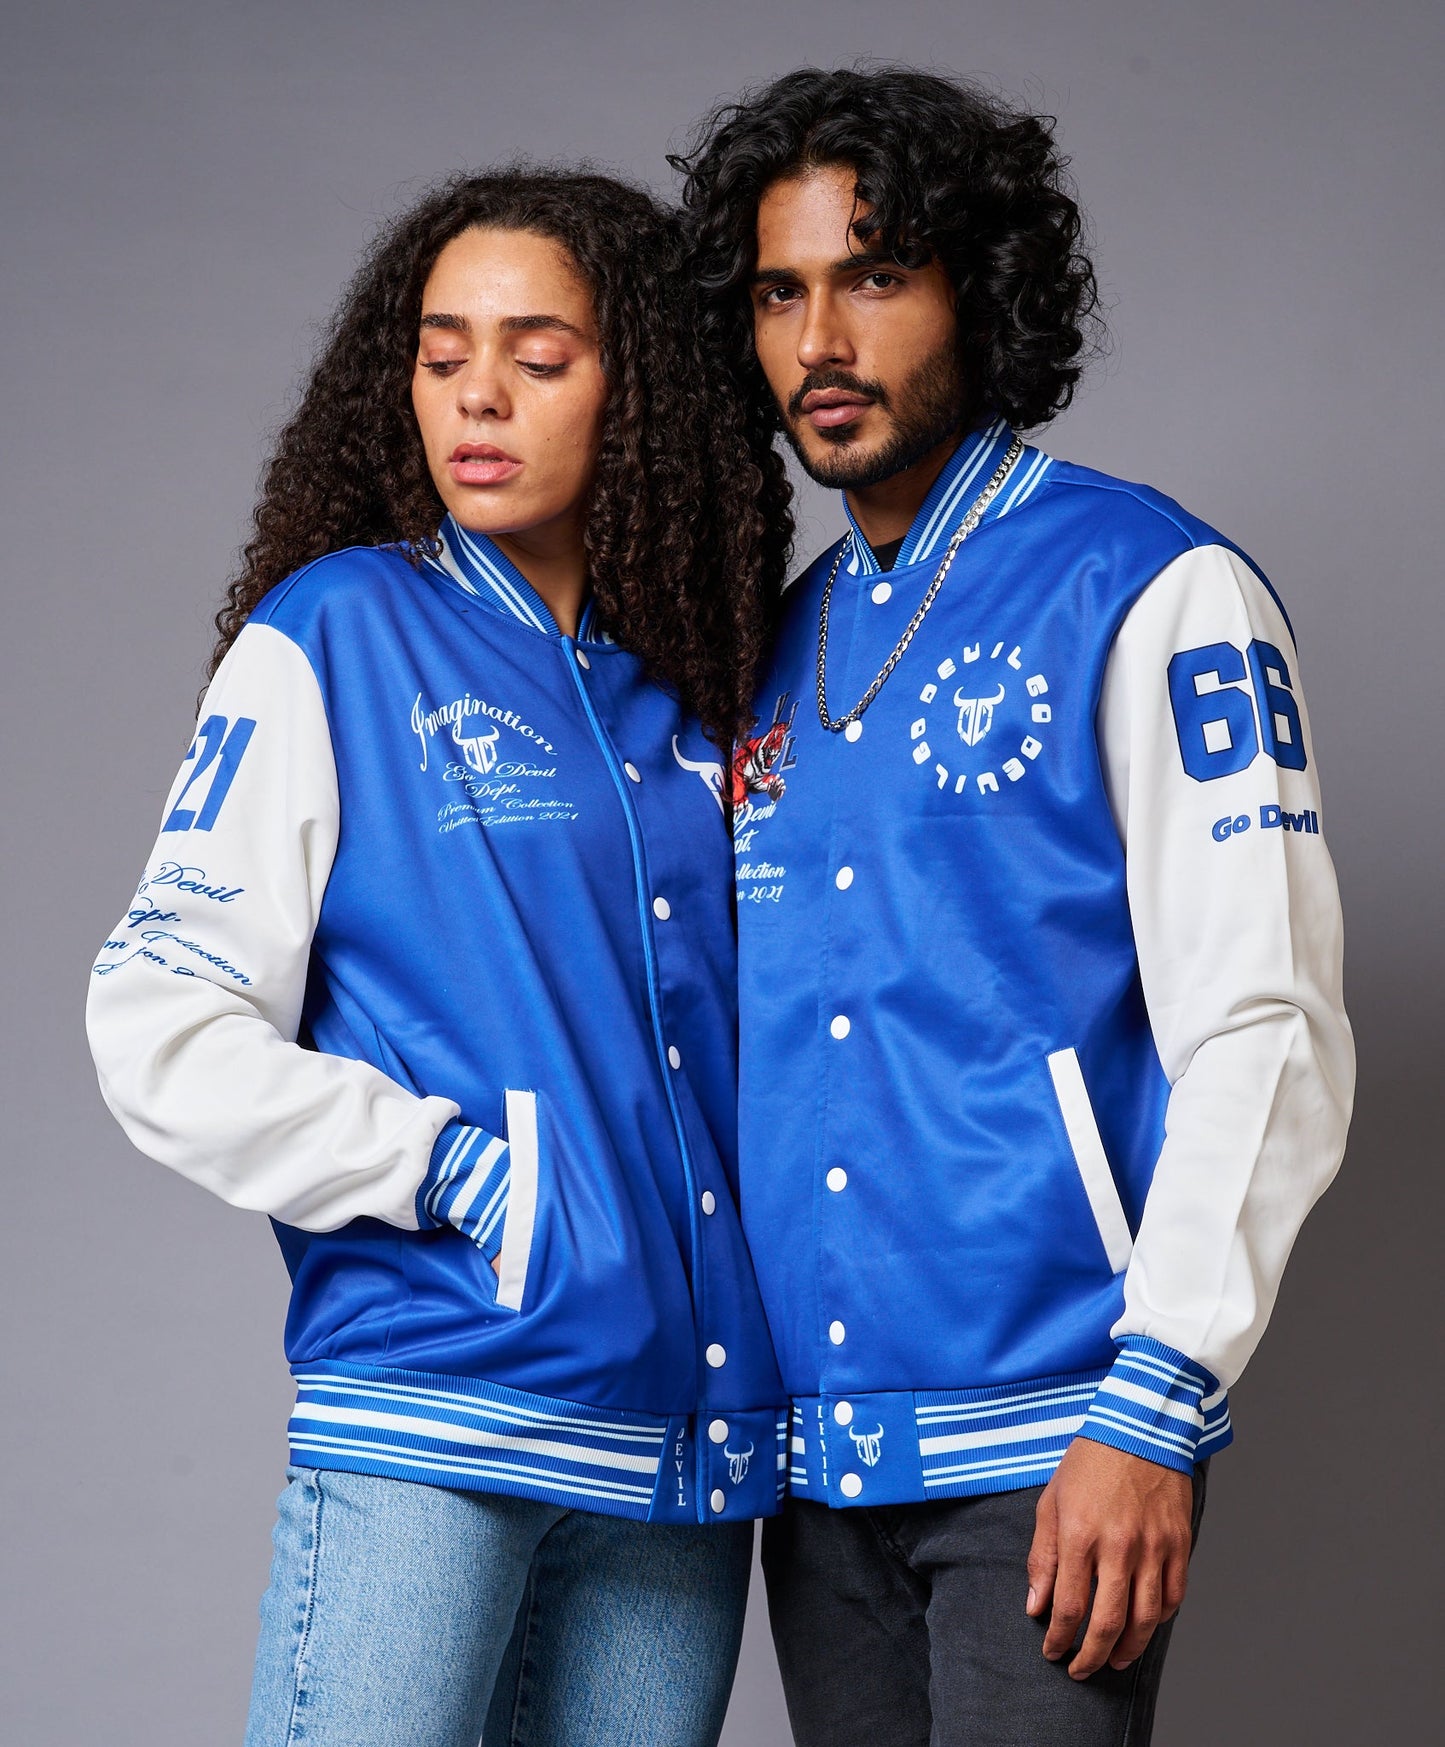 Blue & White Varsity Jackets for Couple Wear - Go Devil